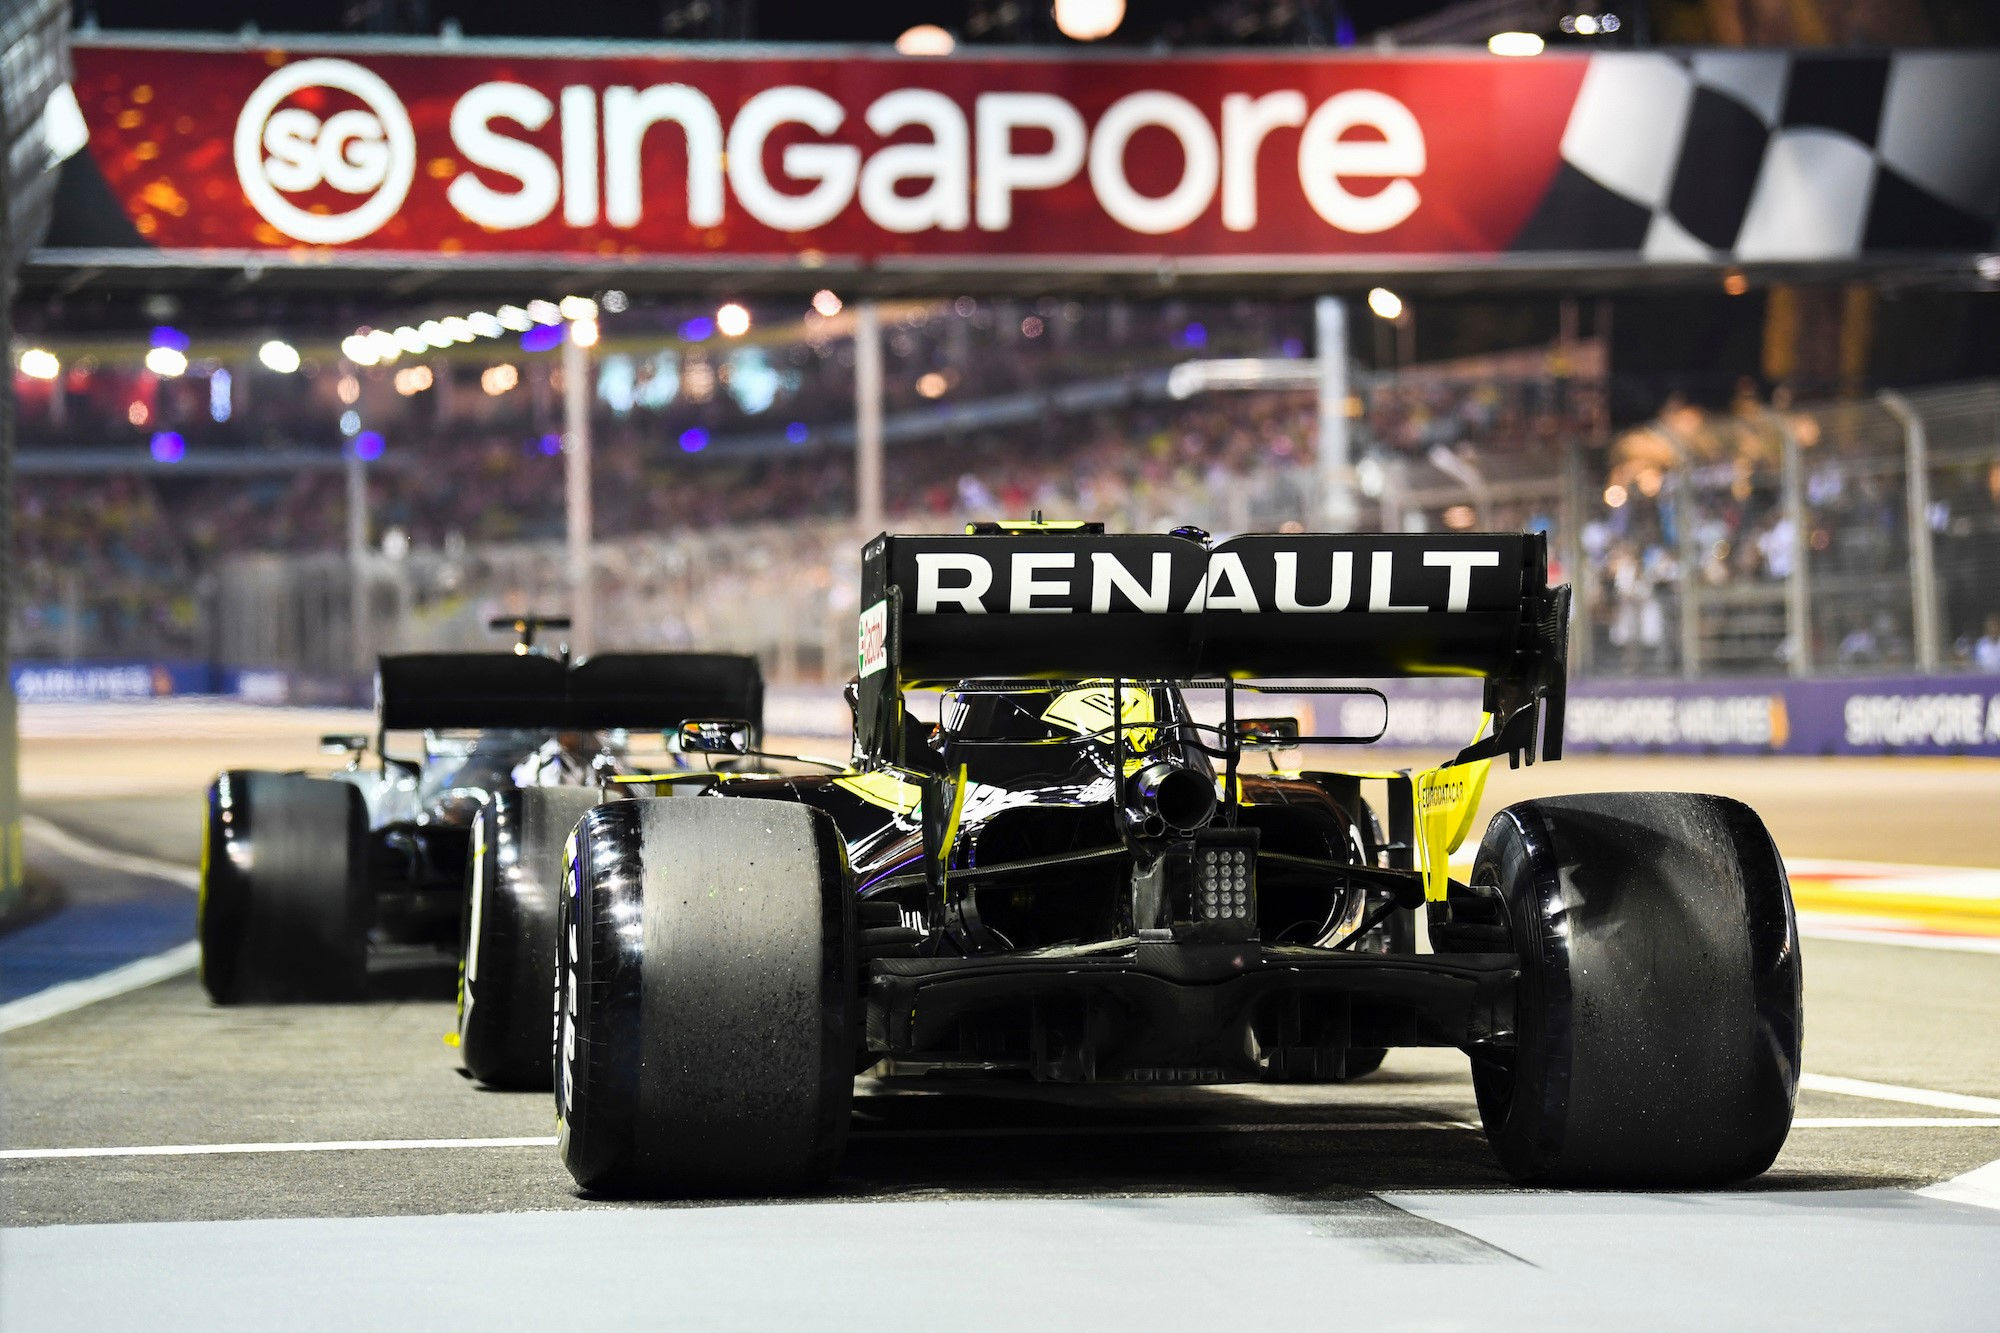 Photo: Singapore Grand Prix/Facebook